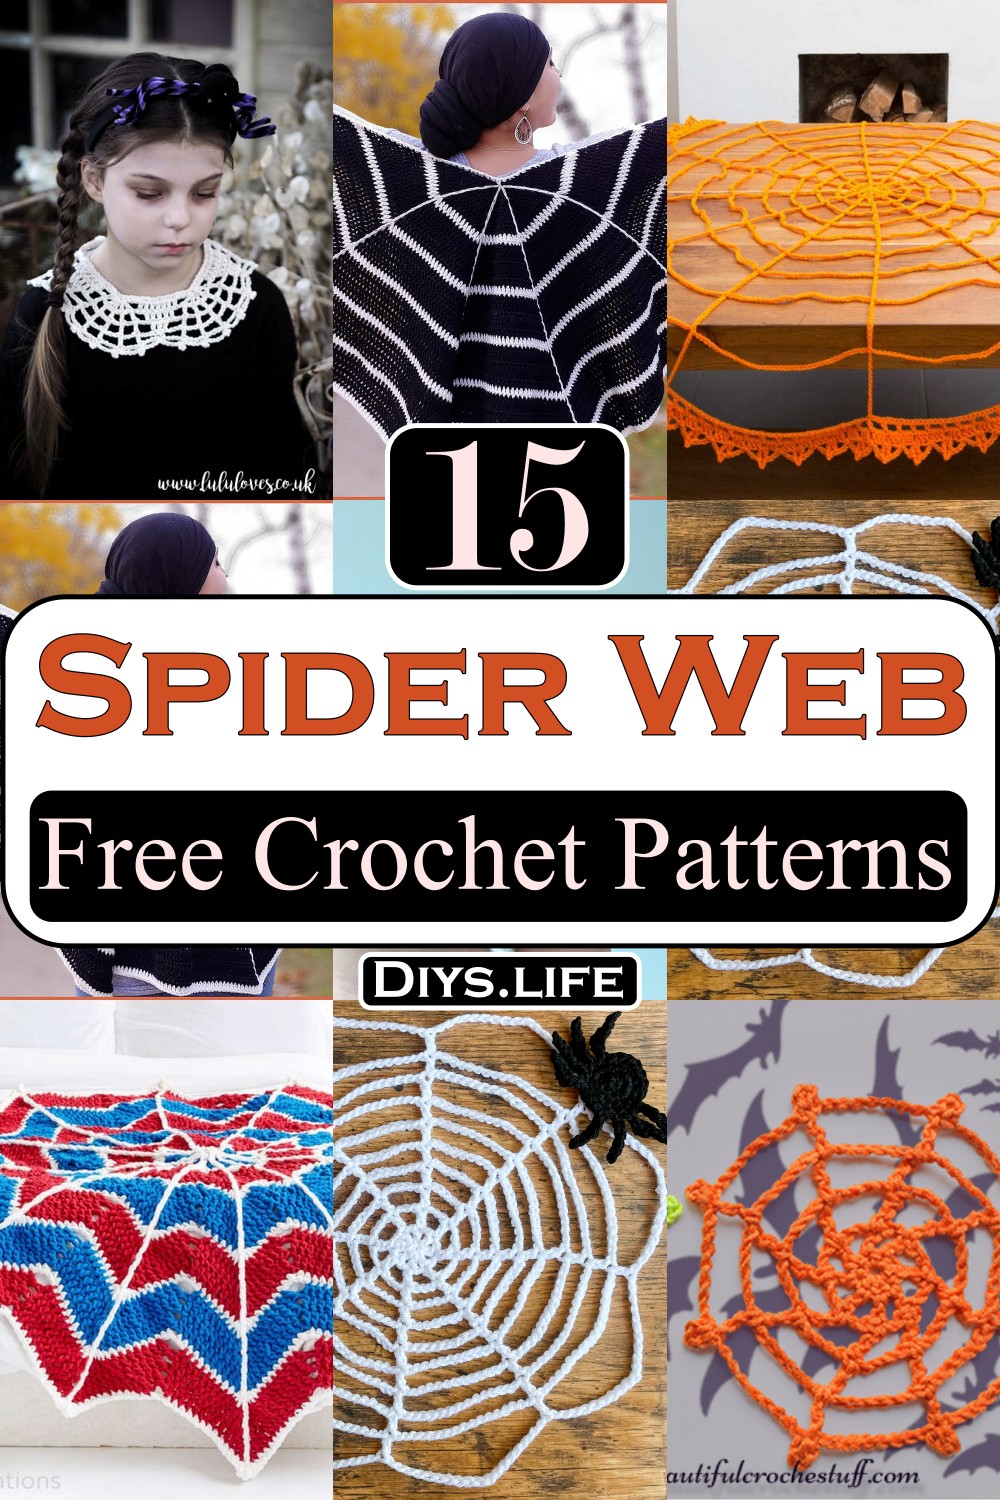 Crochet Spider Web Patterns